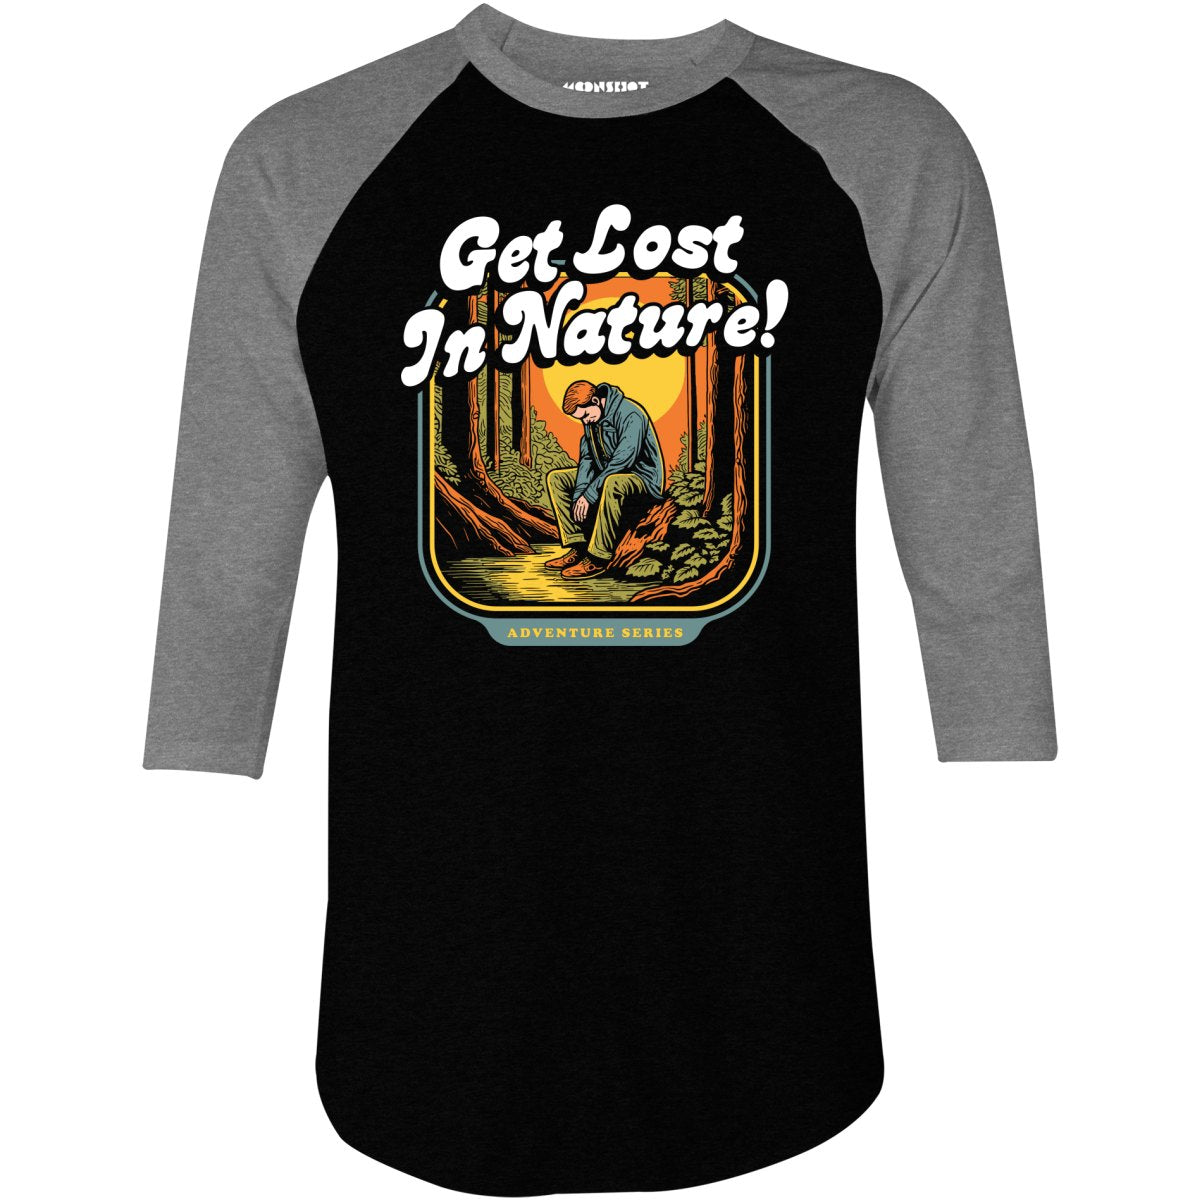 Get Lost in Nature - 3/4 Sleeve Raglan T-Shirt